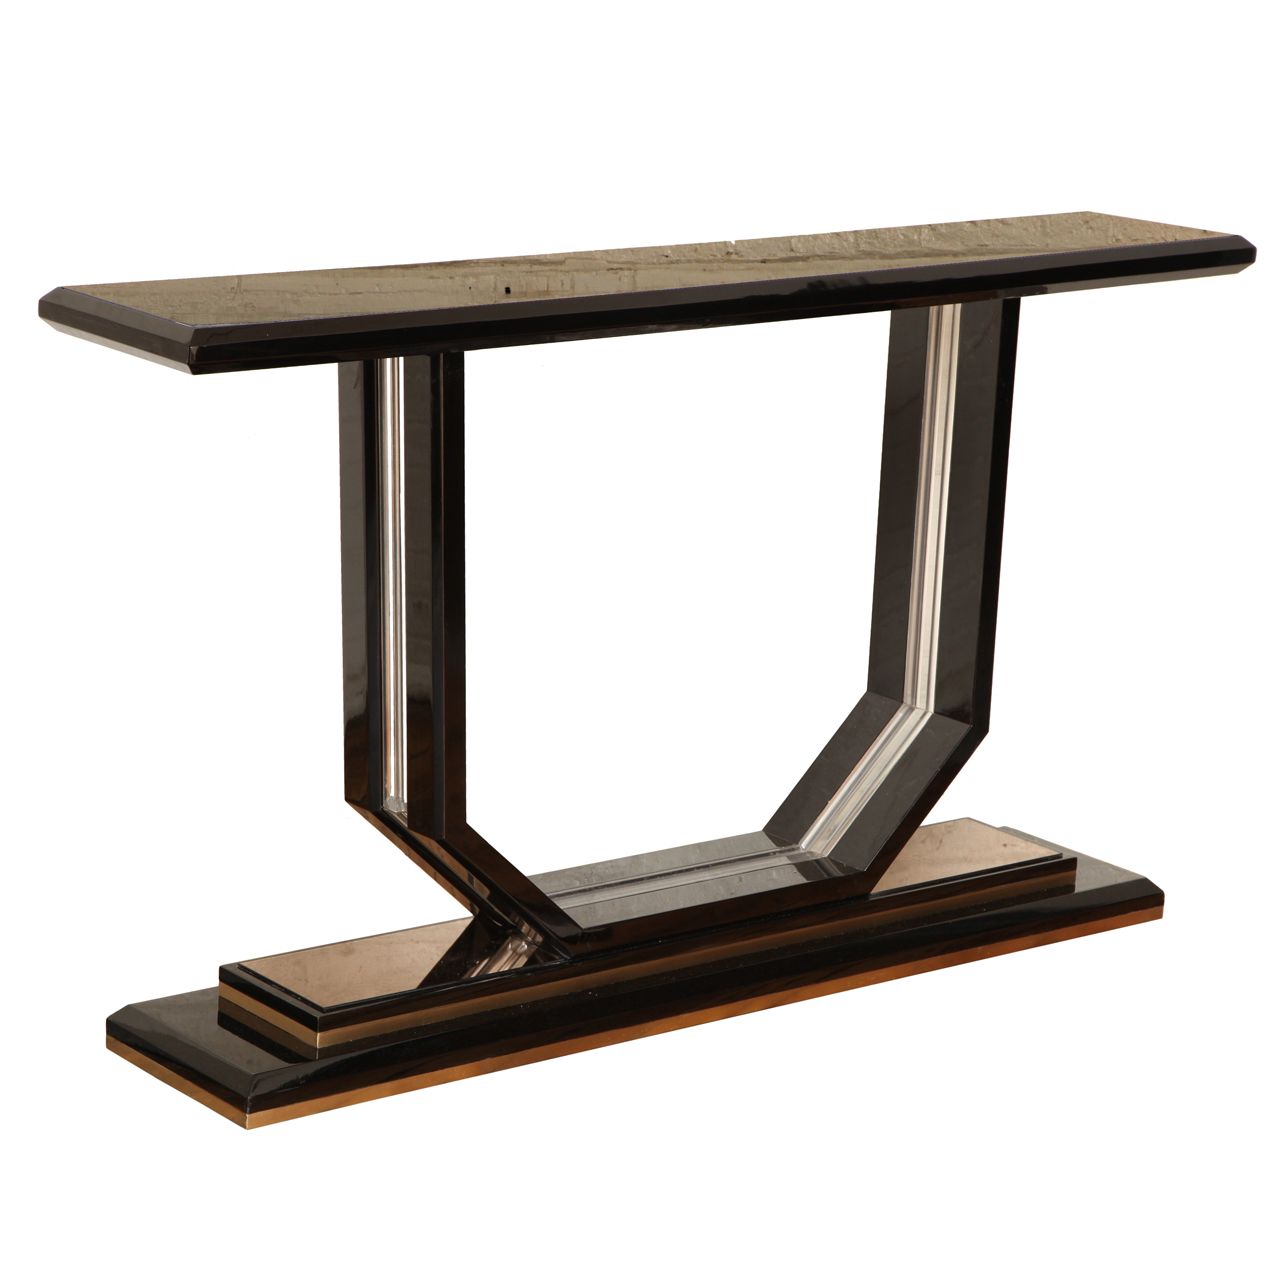 Deko Outlet Online Shop Inspirierend Modernist Console Table Sirop